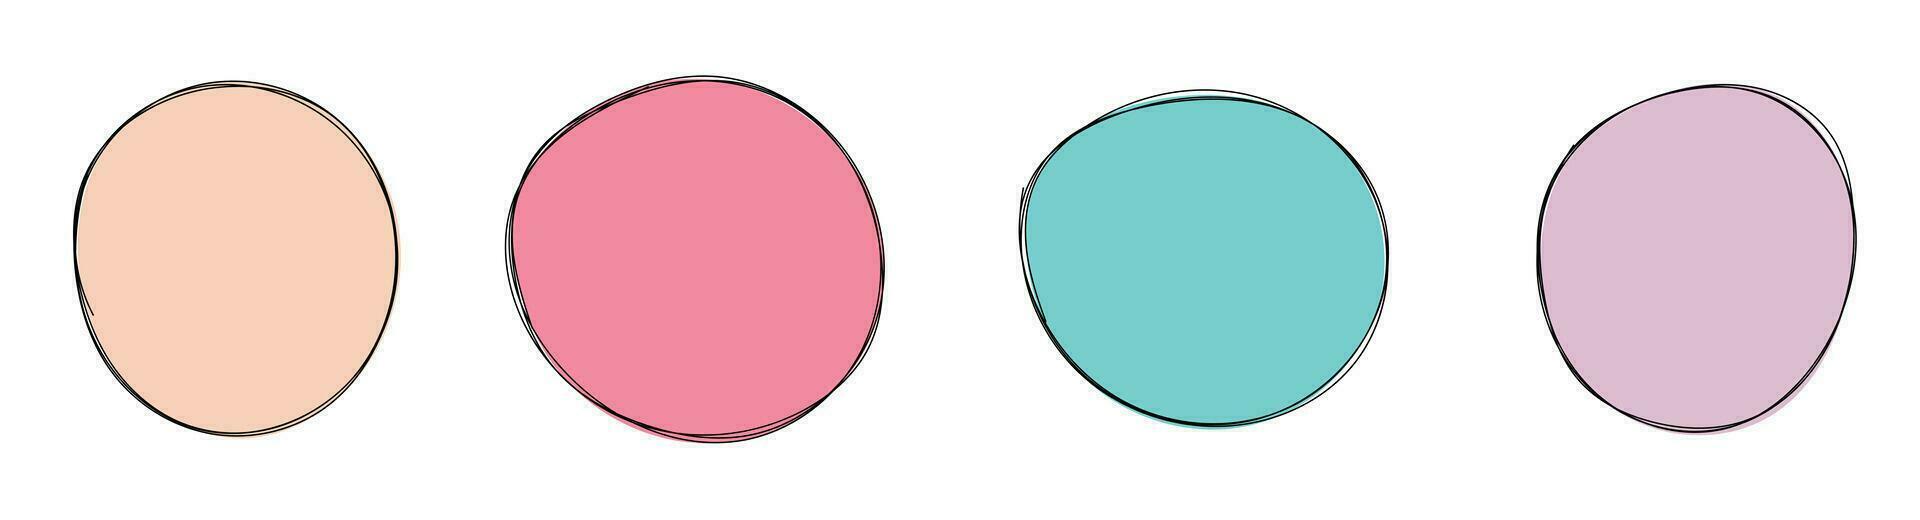 Hand drawn colored round blob vector illustration set